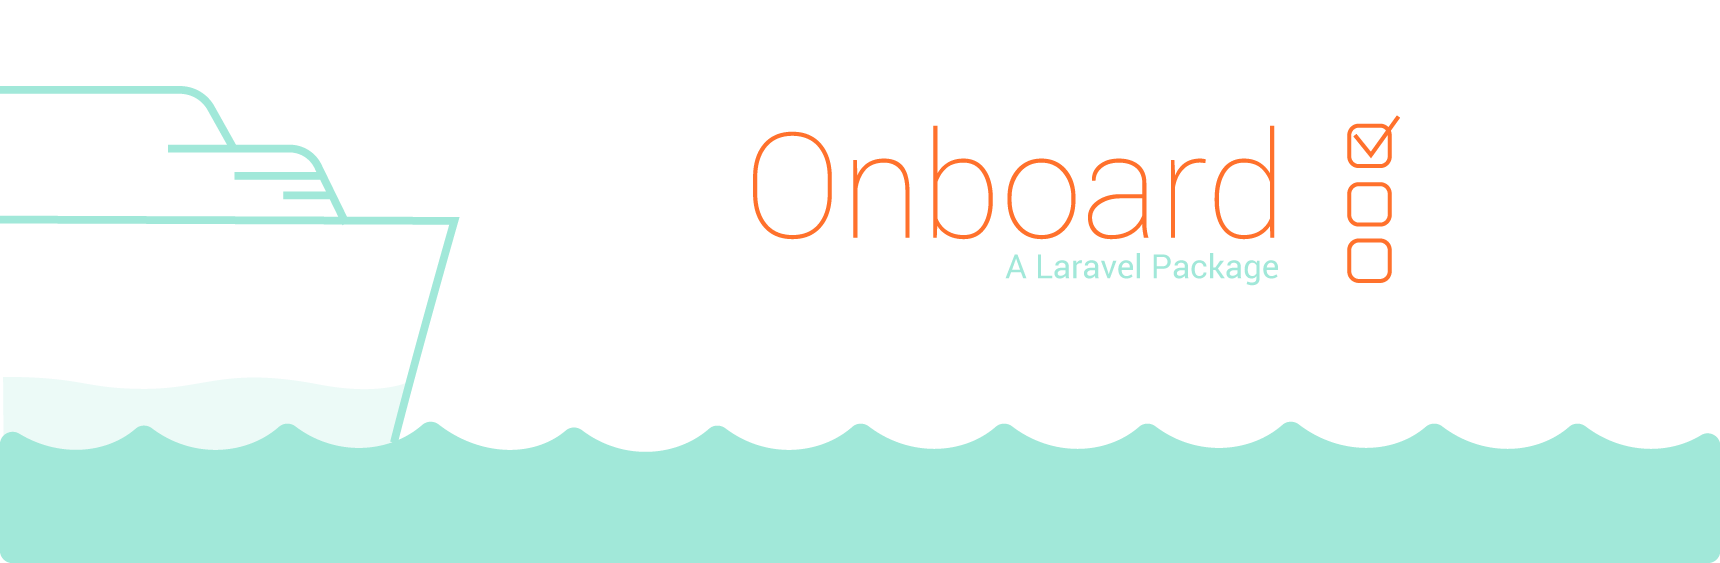 onboard-logo.png